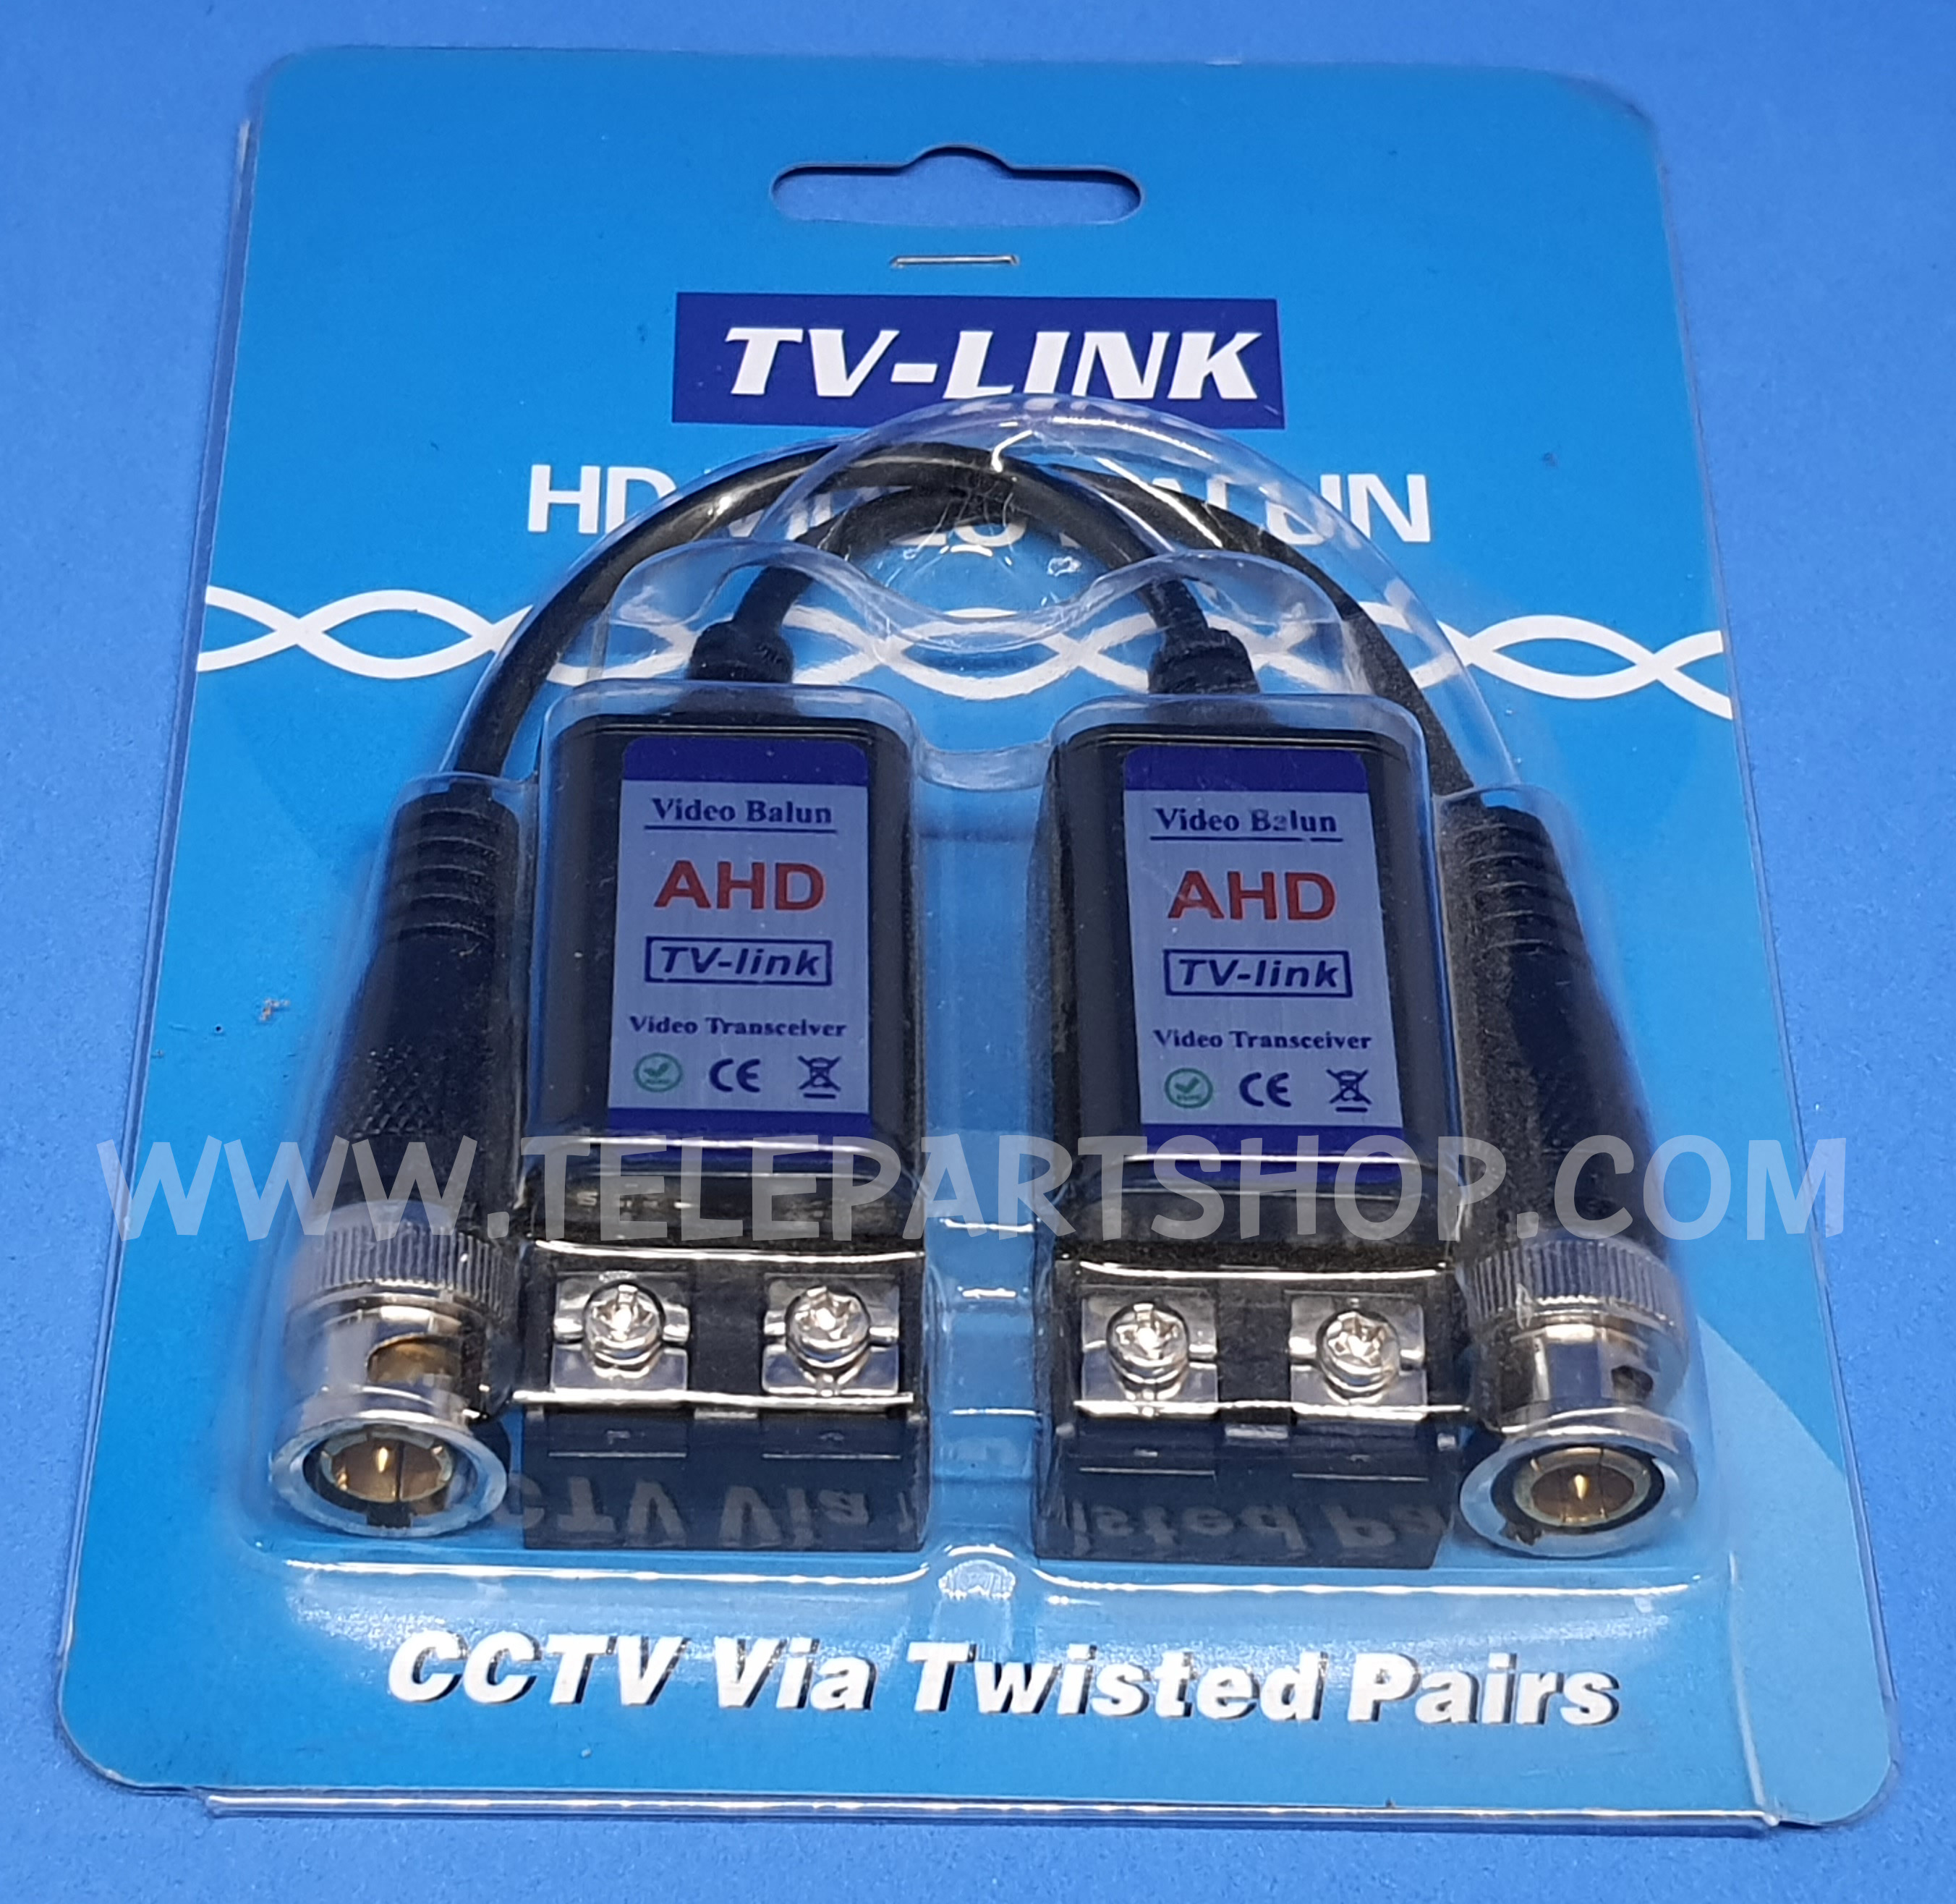 HD VIDEO BALUN(TAIWAN) รุ่น TV-Link-A2 คมชัดระดับ HD รุ่นแบบมีสาย 1 Chanel+ Lightning Protection  CE Approval